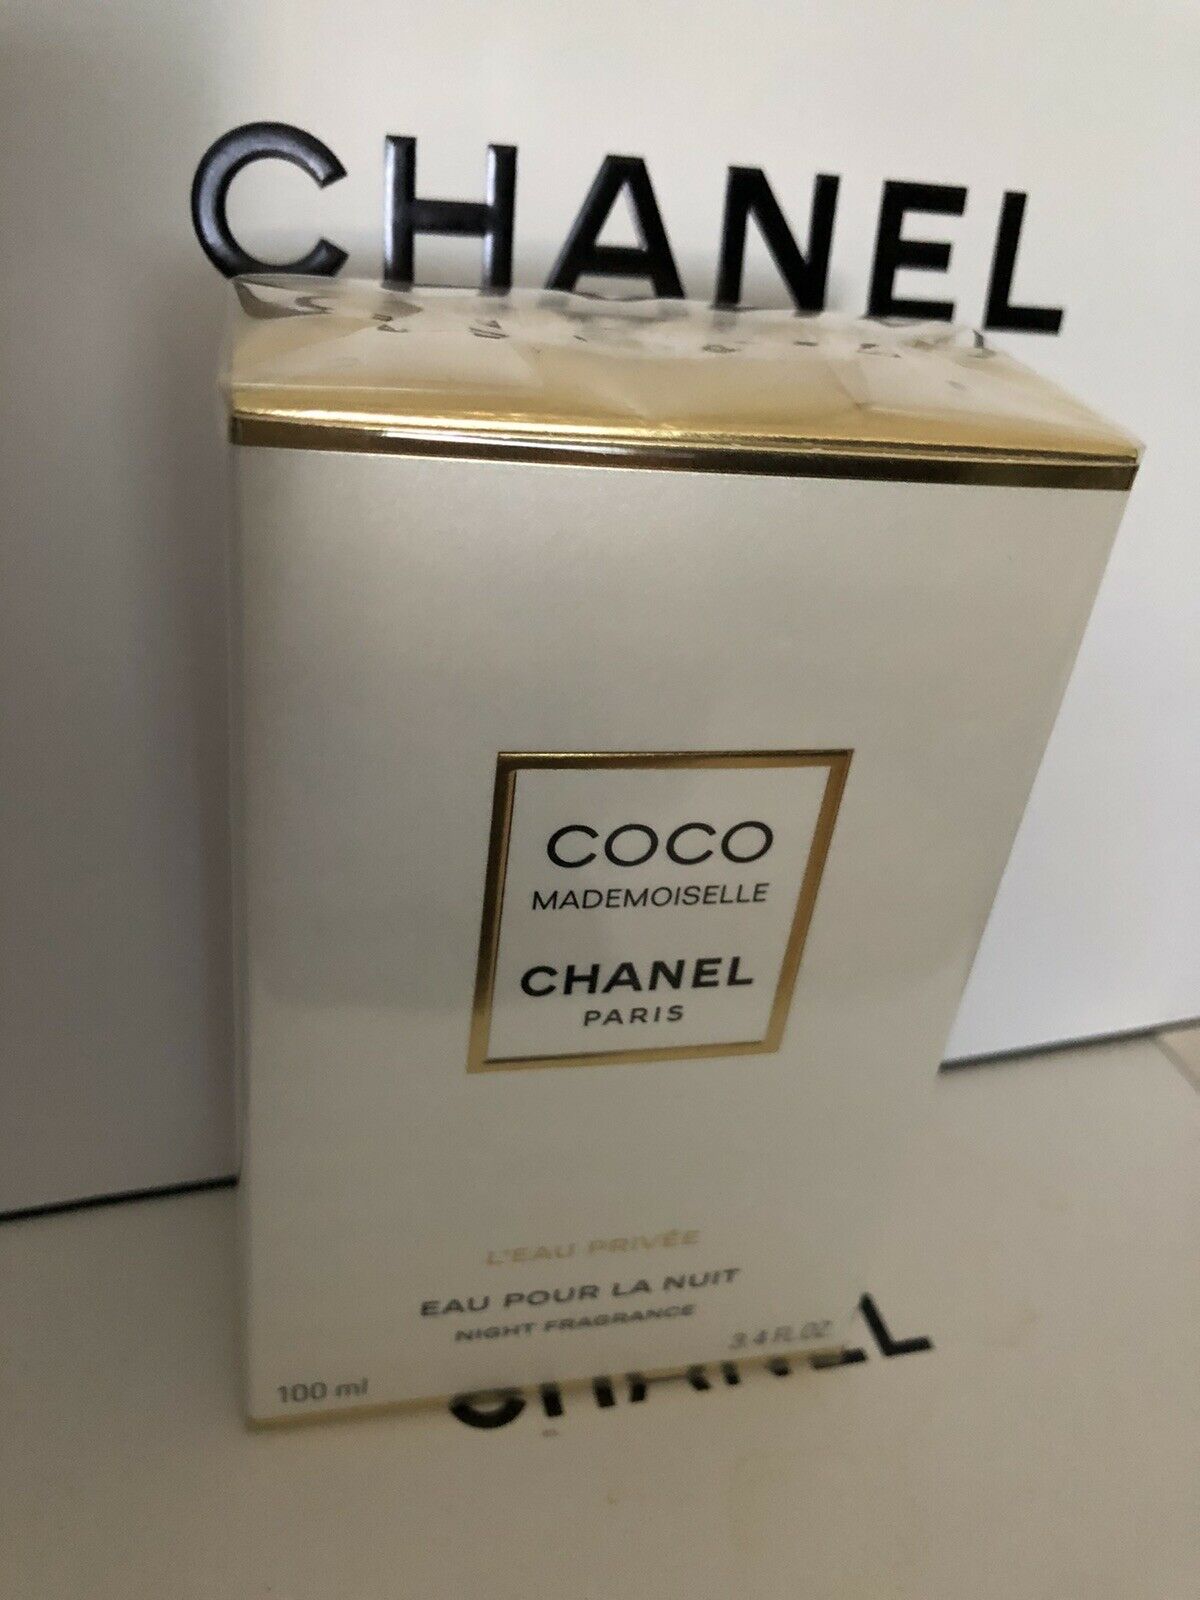 Nước hoa Chanel Mademoiselle L'eau Privee ™ Authentic 100%